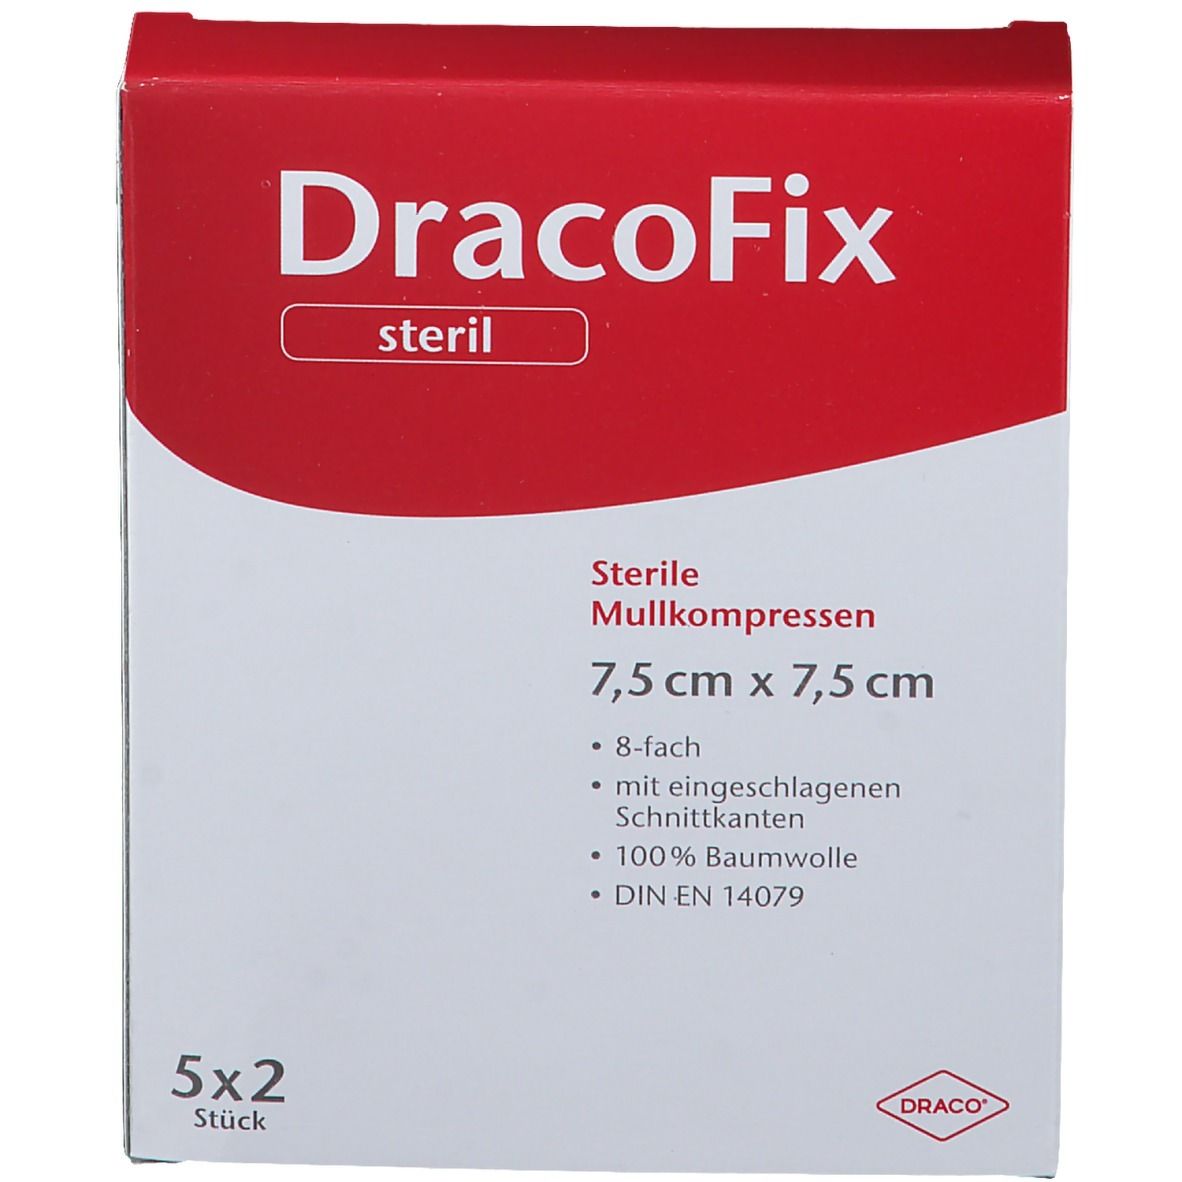 DracoFix Mullkompressen steril 8fach 7,5 x 7,5 cm